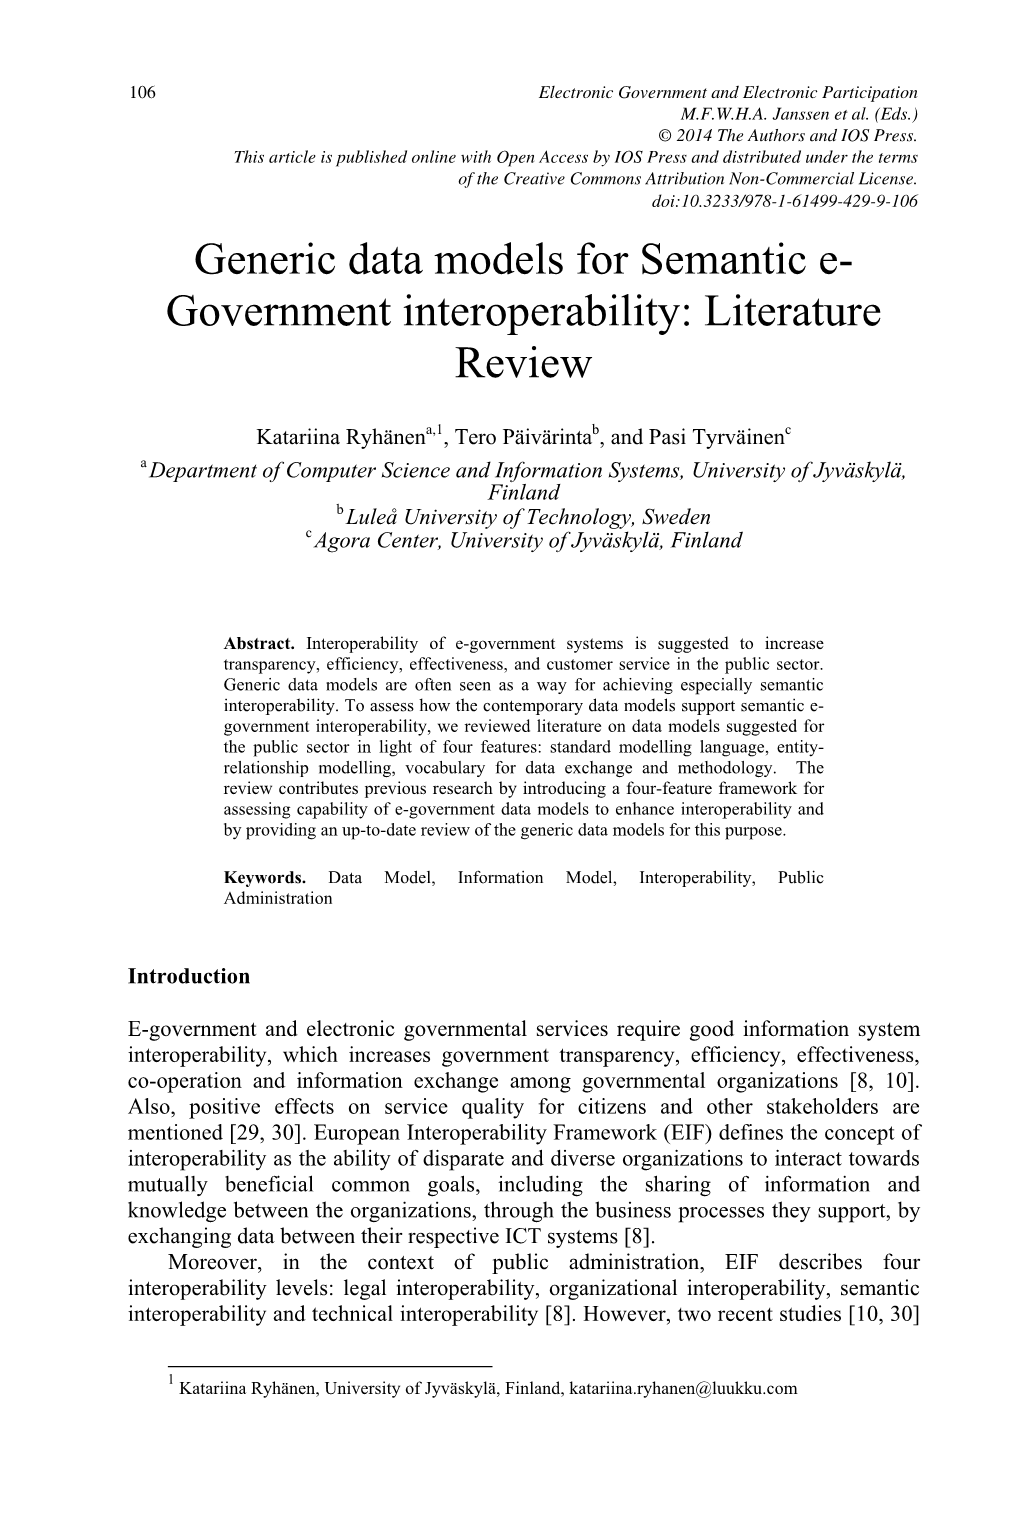 Generic Data Models for Semantic E- Government Interoperability: Literature Review